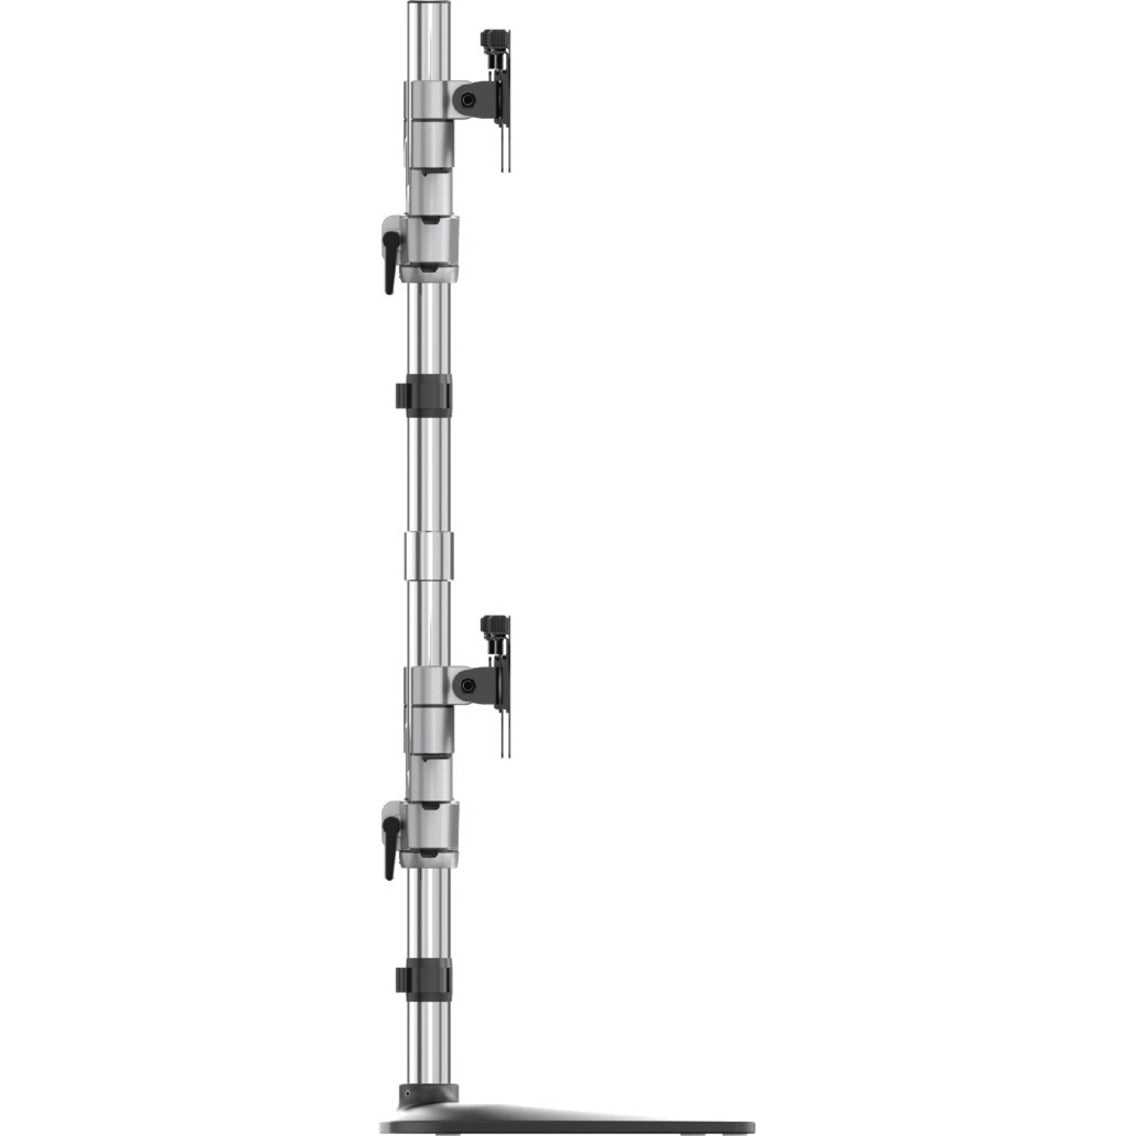 StarTech.com ARMQUADSS Quad-Monitor Stand - Articulating - Steel & Aluminum, For up to 32" VESA Mount Monitors